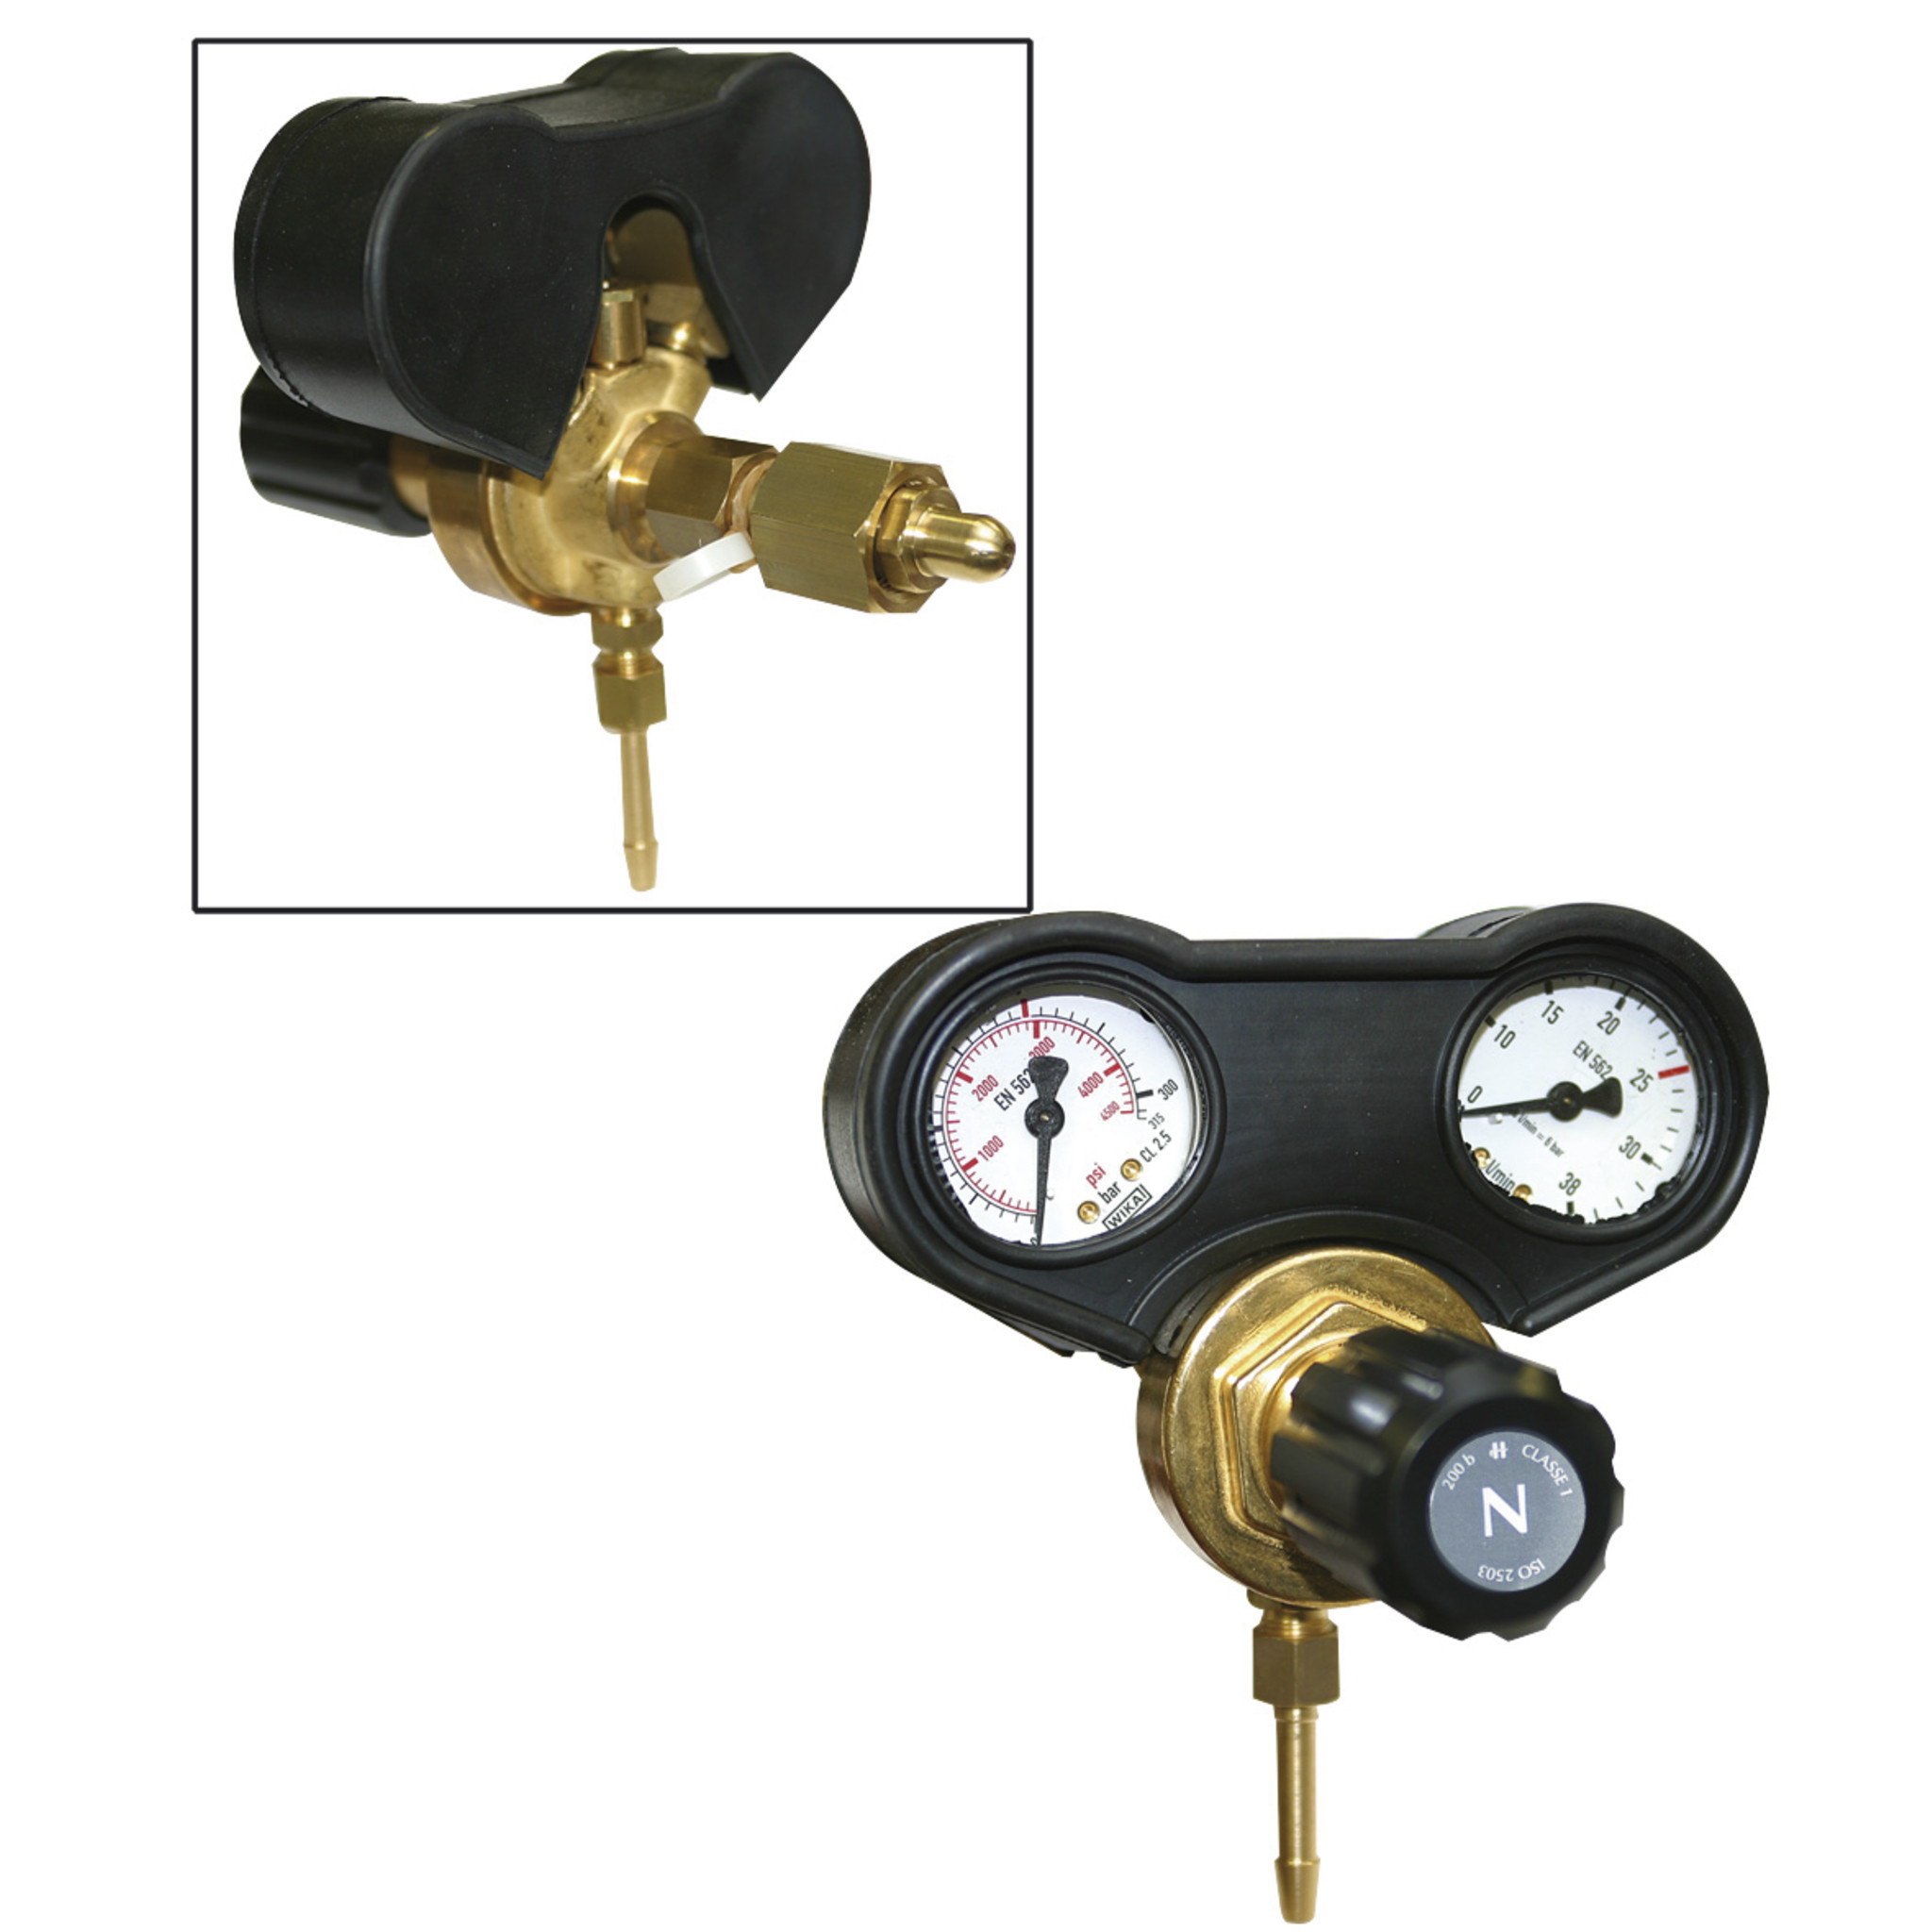 Se GYS Gas Manometer m/ dobbelt ventil ventiler med gummi for bedre beskyttelse hos BLITE